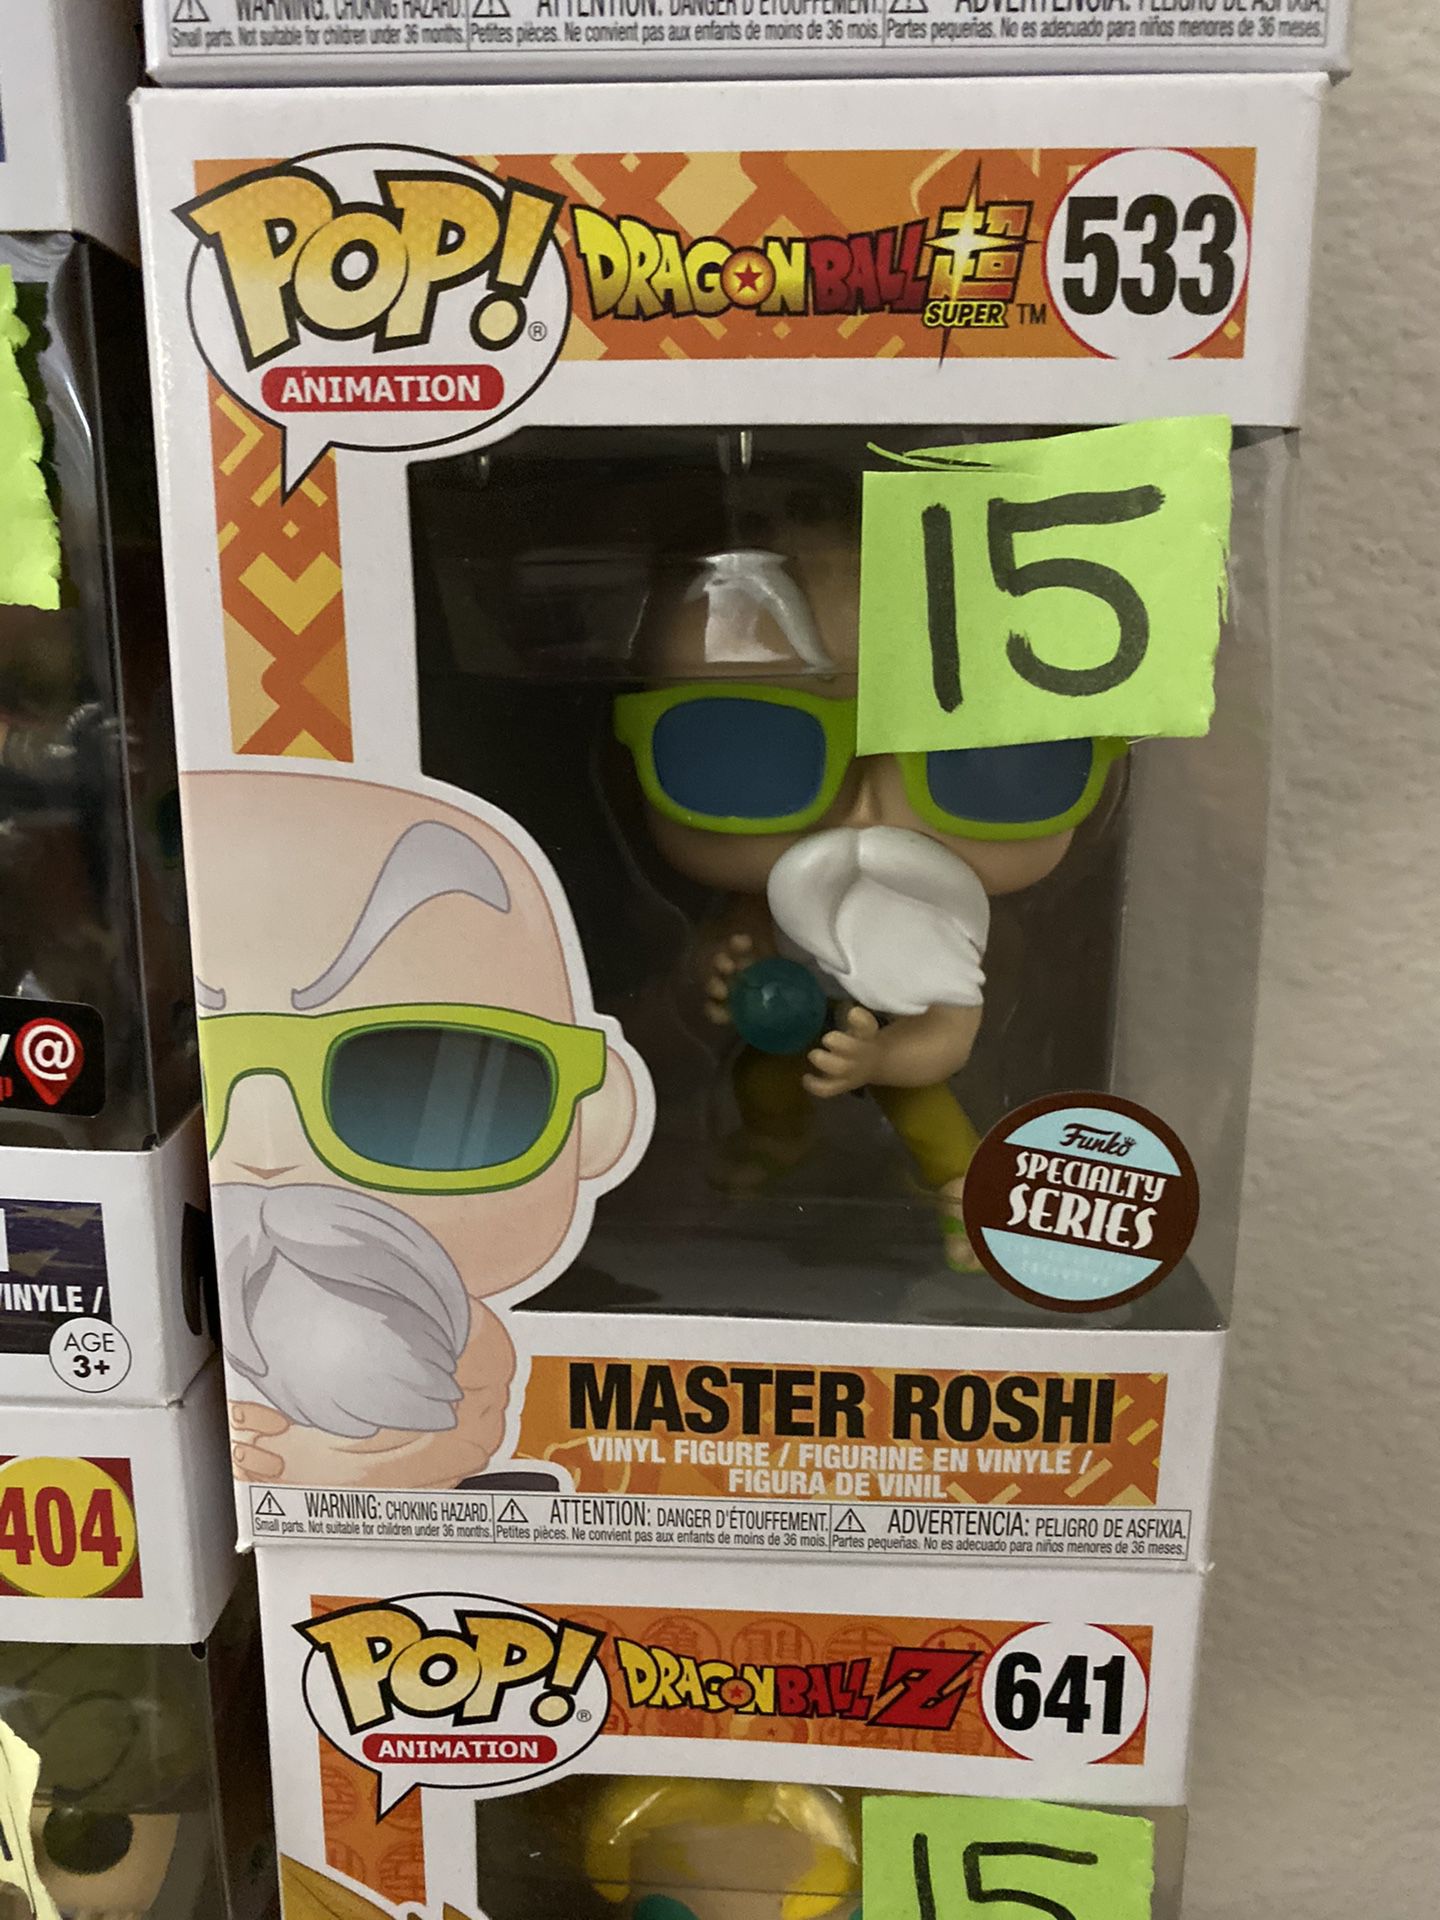 Master roshi Funko pop